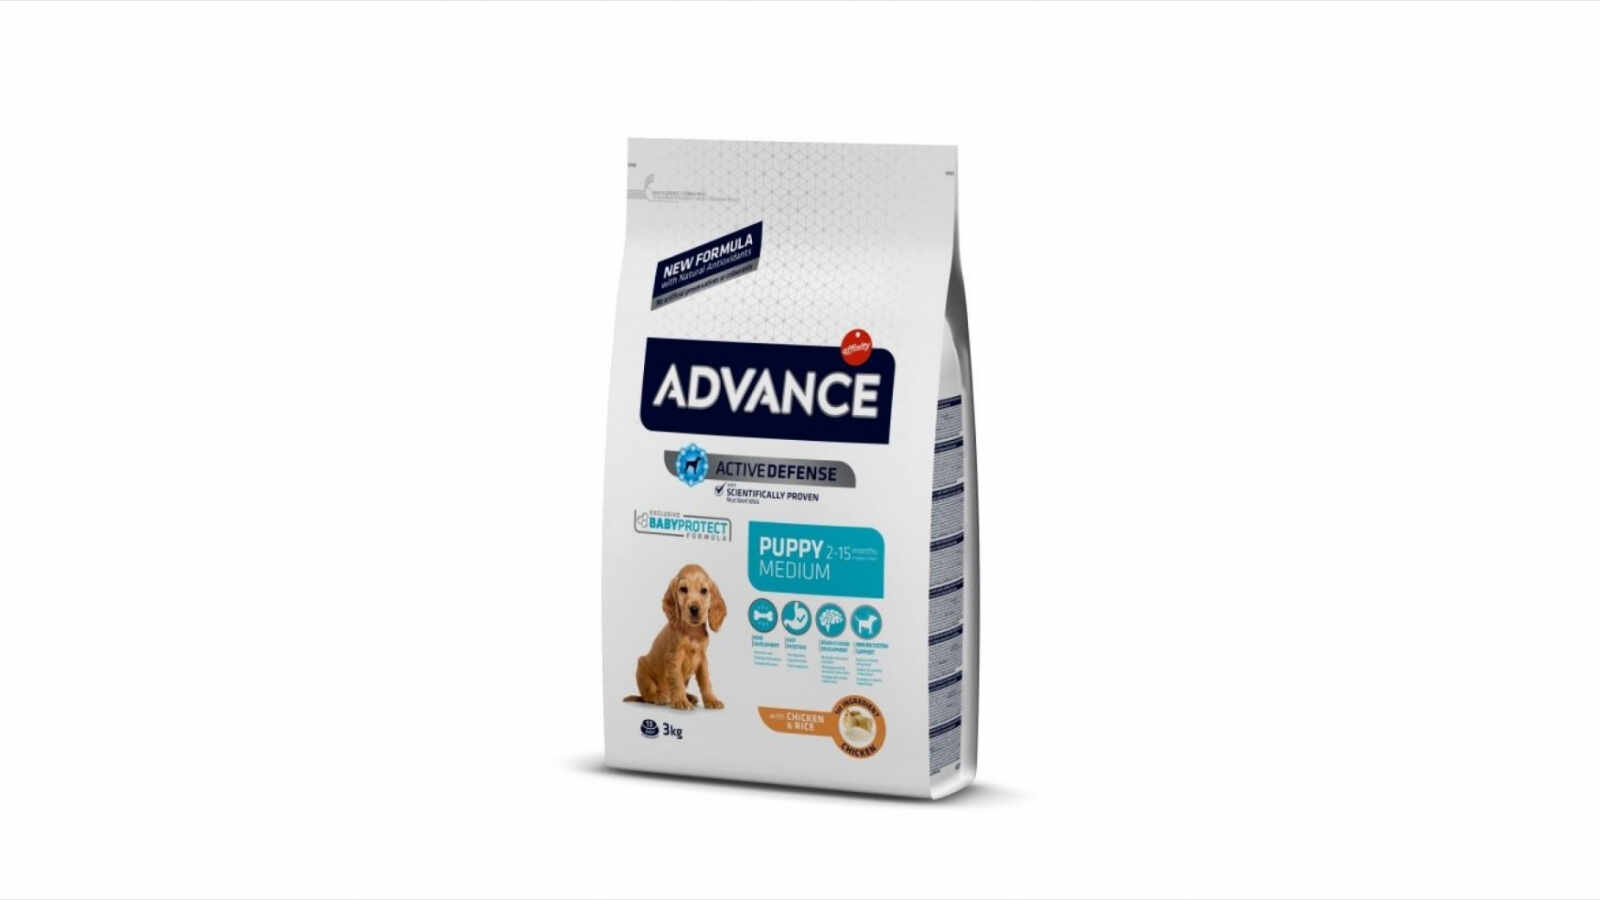 Advance Dog Puppy Medium Protect, 3 Kg